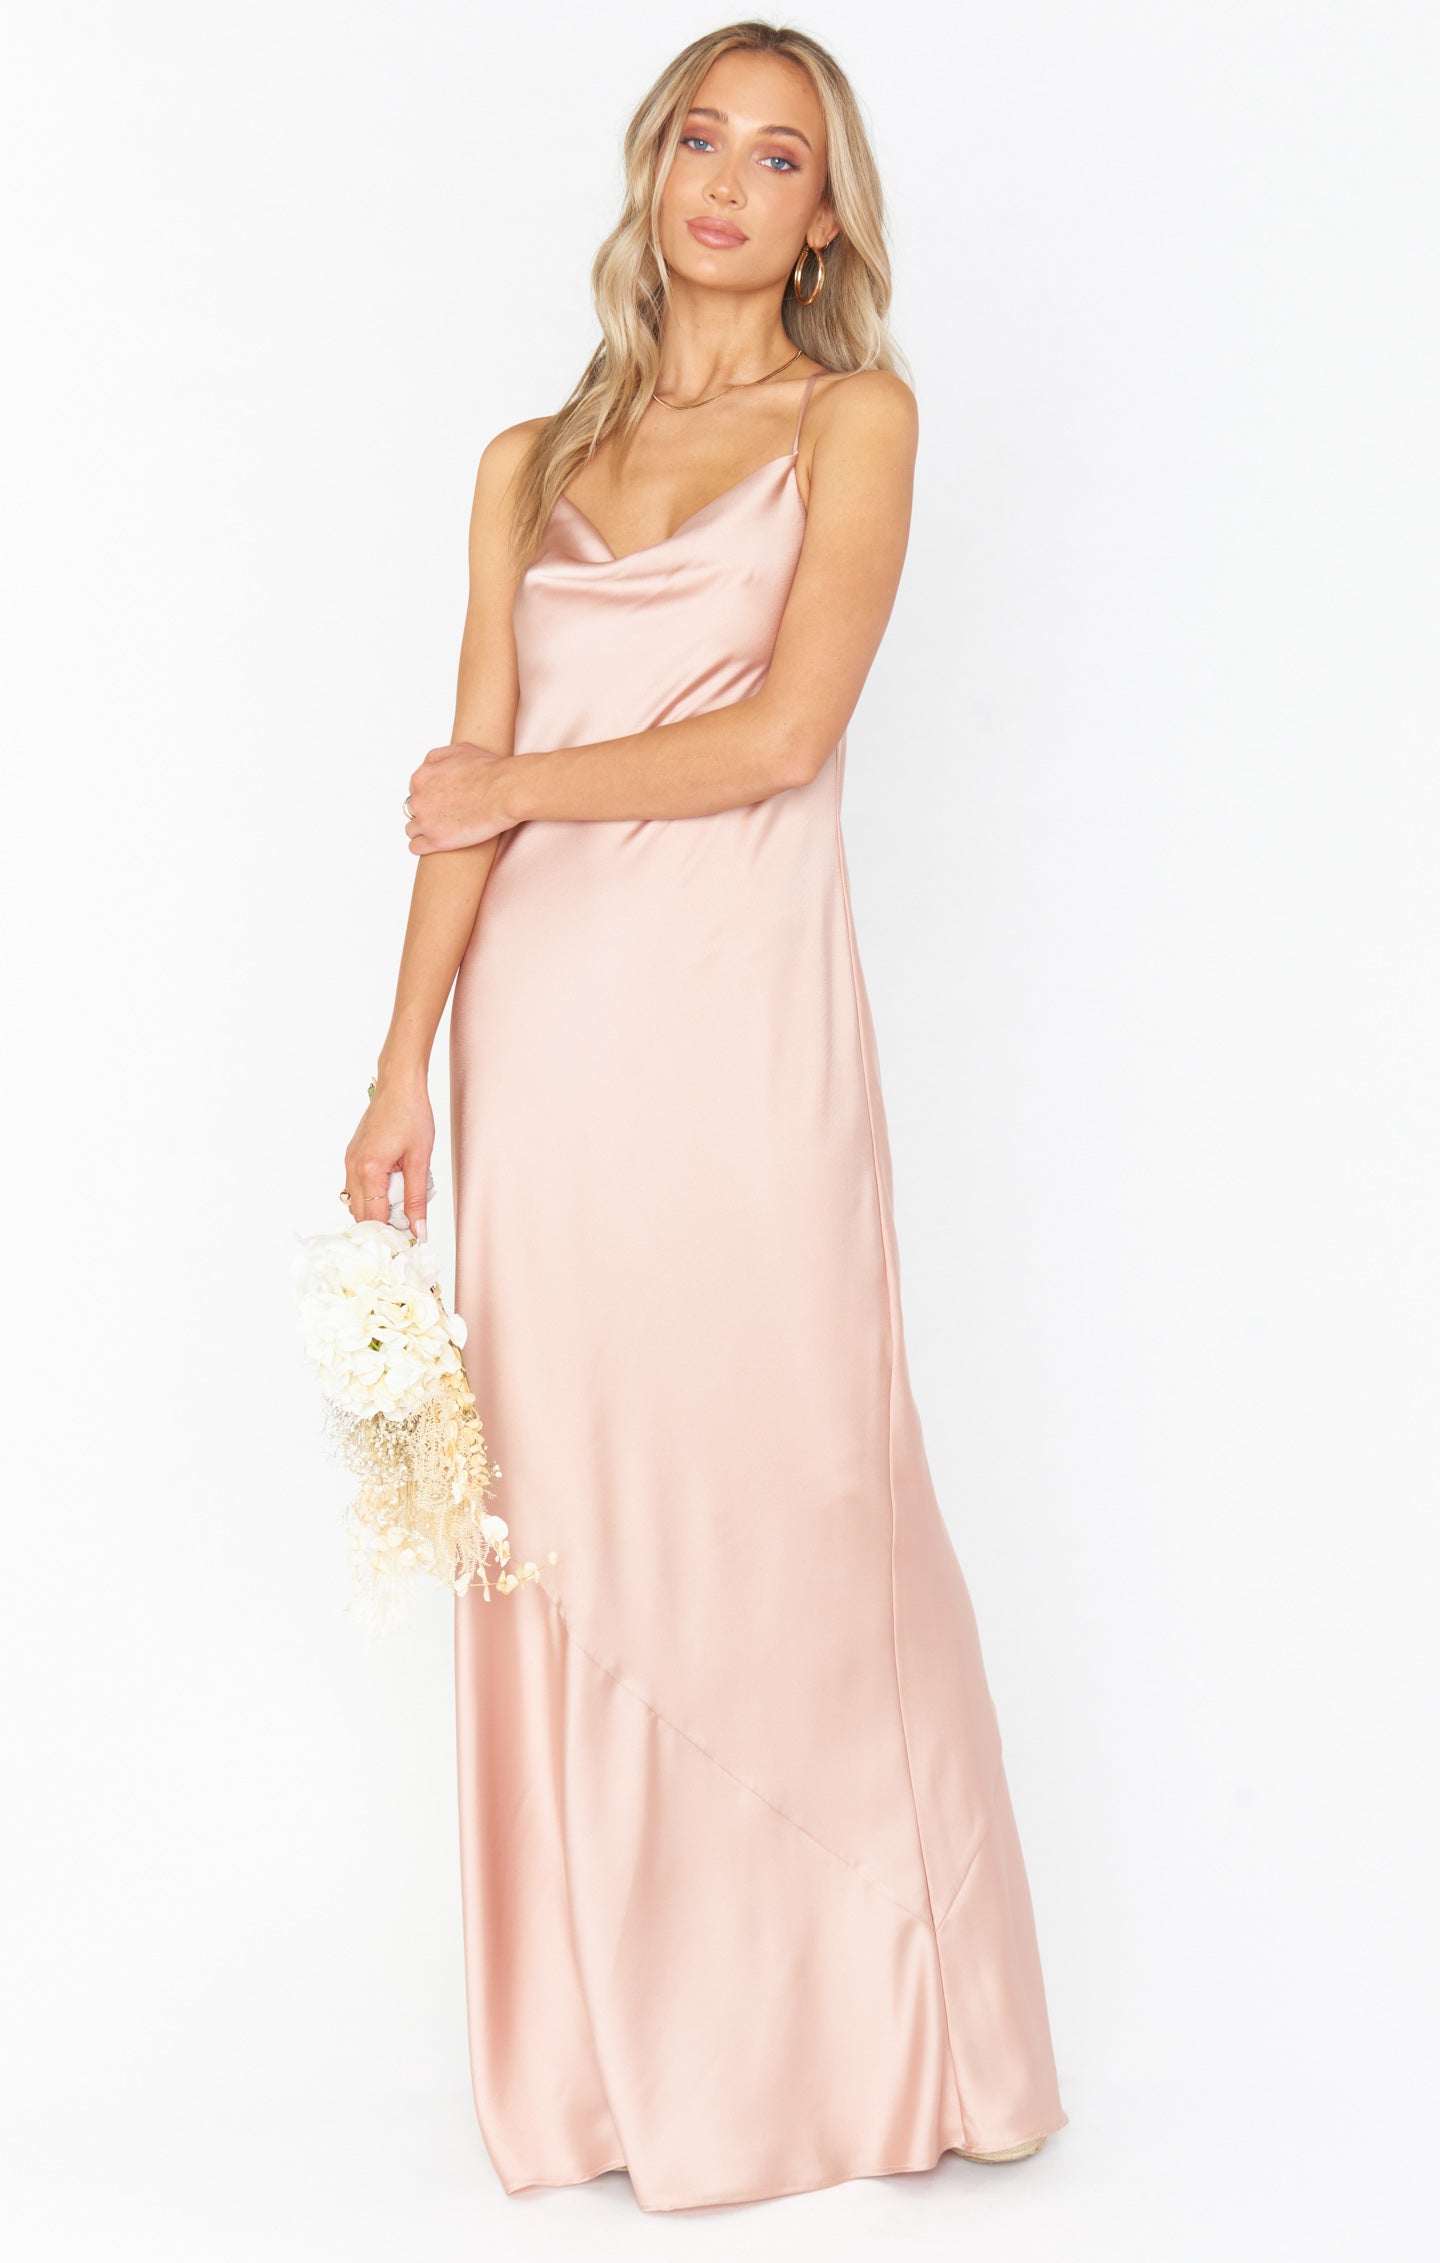 Tuscany Maxi Slip Dress ~ Rose Gold Luxe Satin